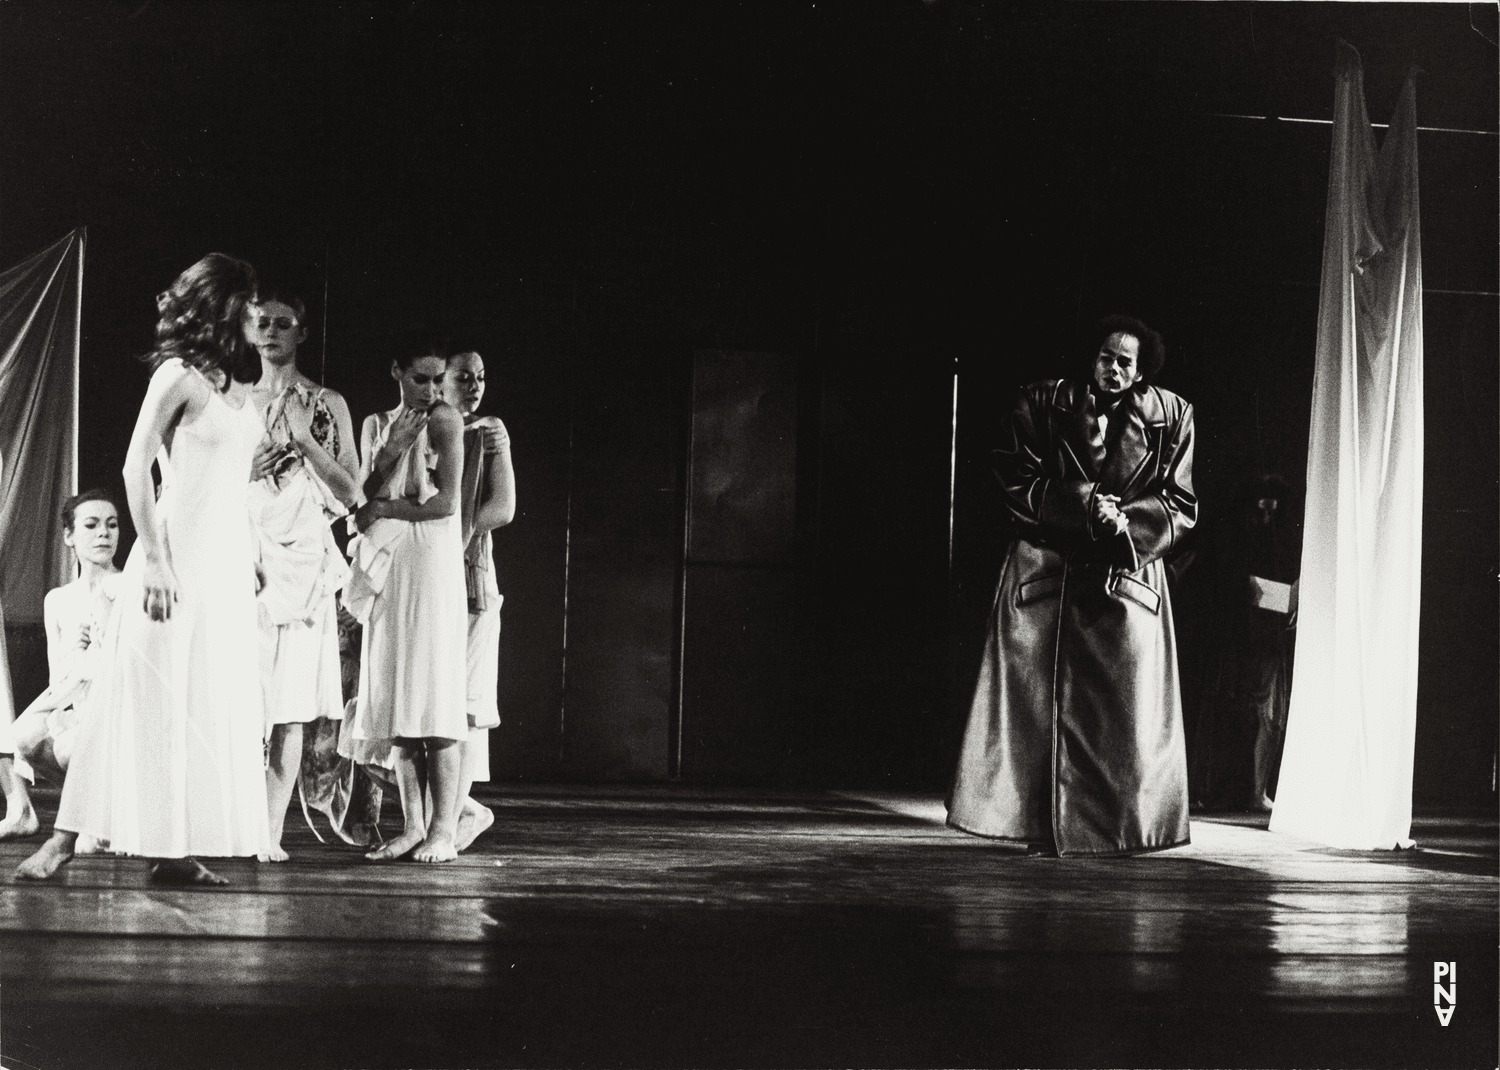 “Iphigenie auf Tauris” by Pina Bausch at Opernhaus Wuppertal, April 20, 1974